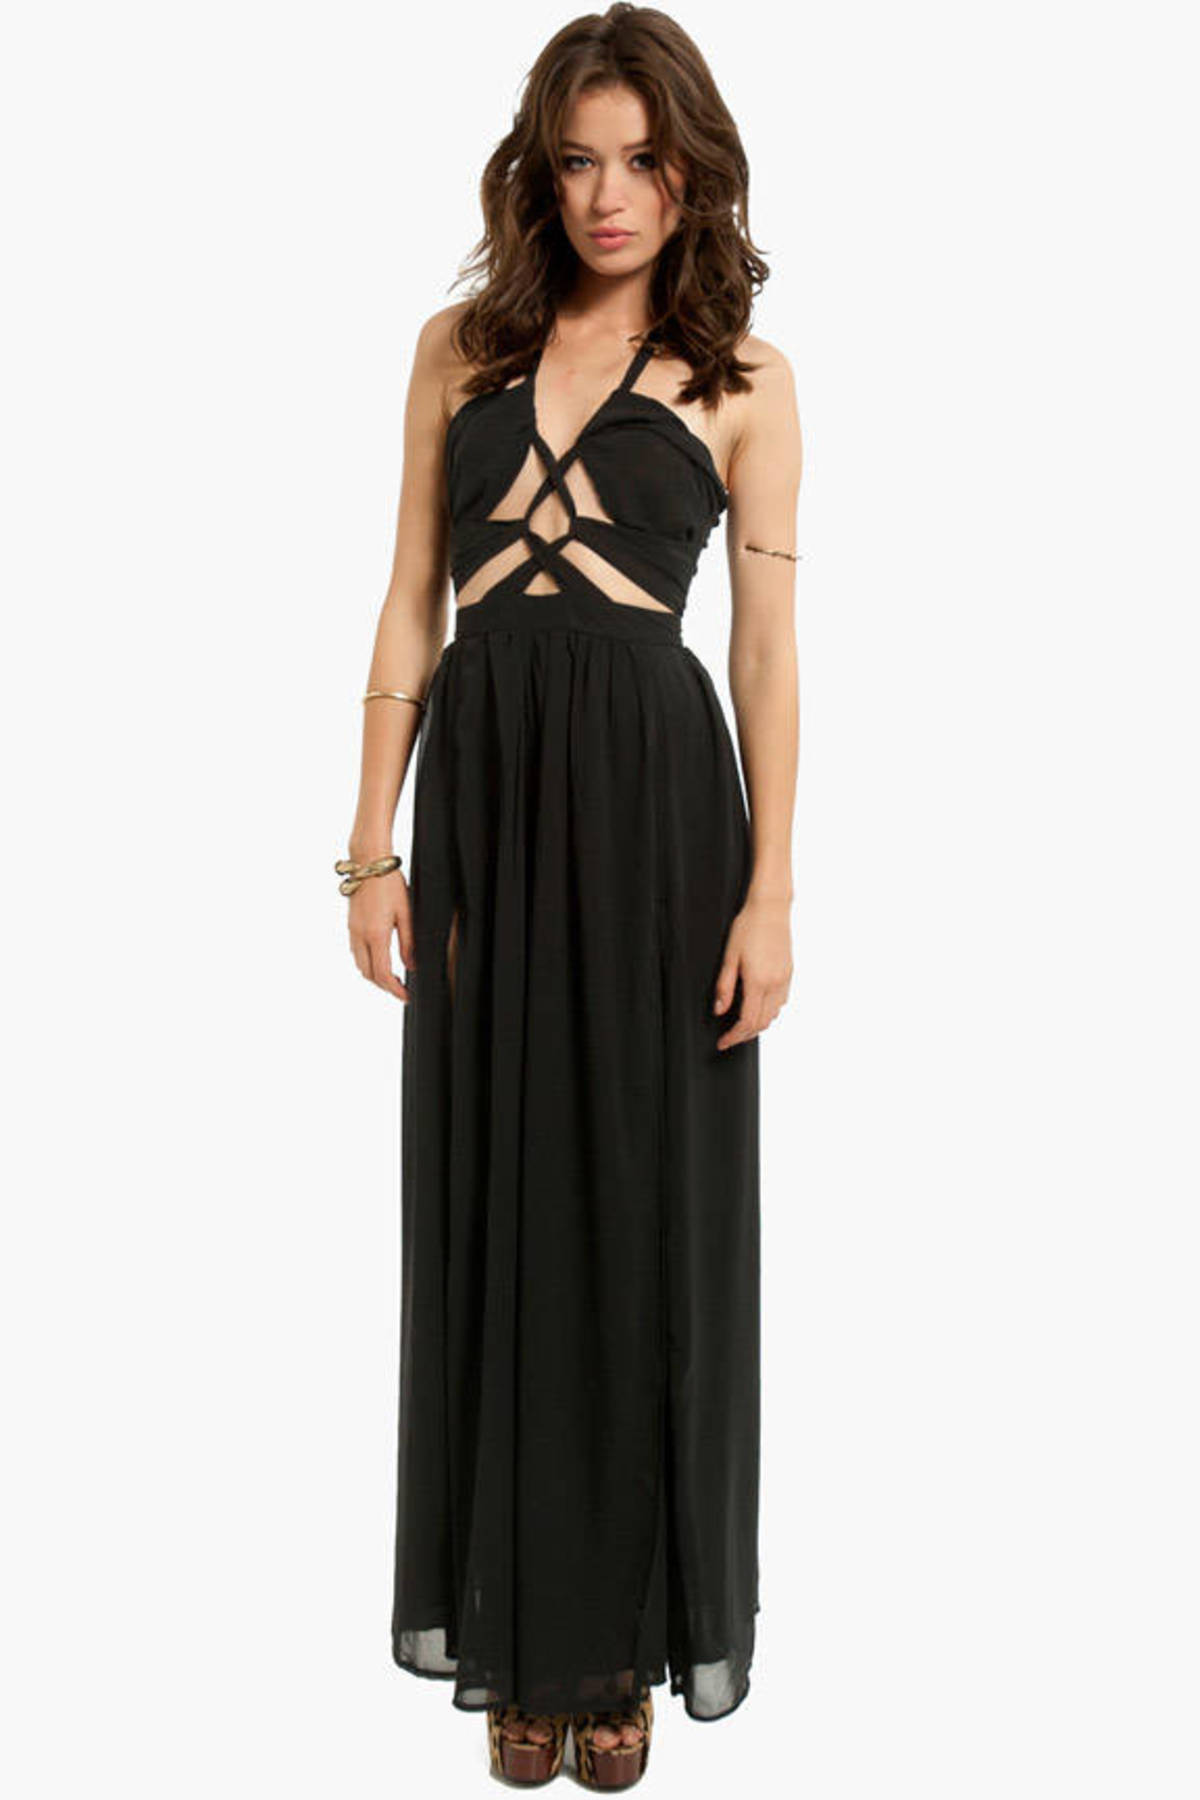 Vixen Maxi Dress in Black - $31 | Tobi US